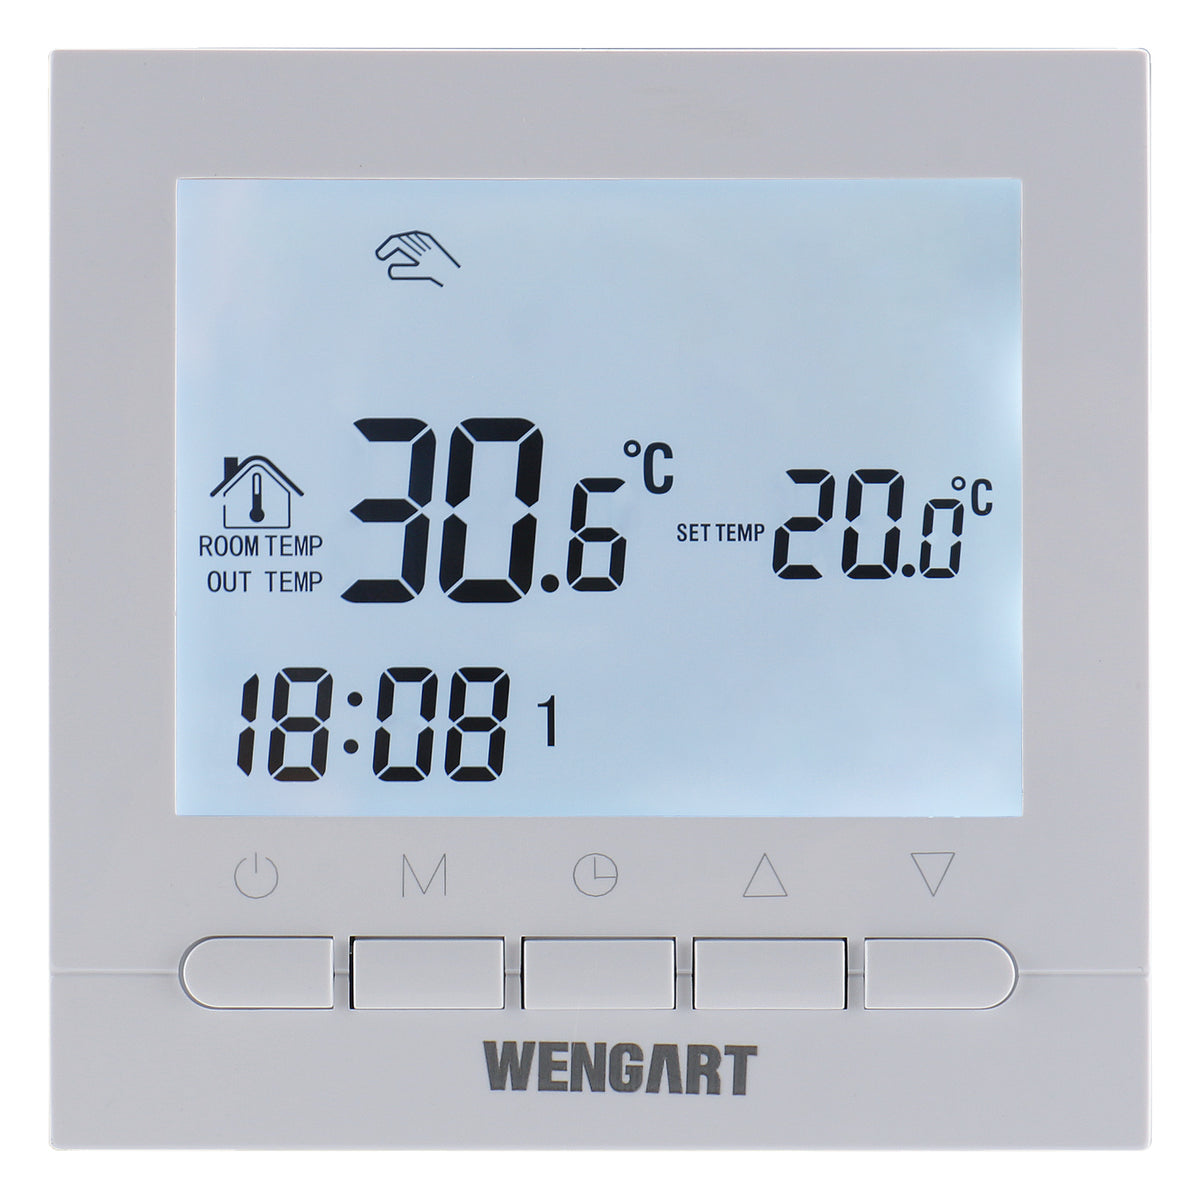 Wengart Gas Thermostat WG02B04BW,Digital LCD Display,Programmable,Batt